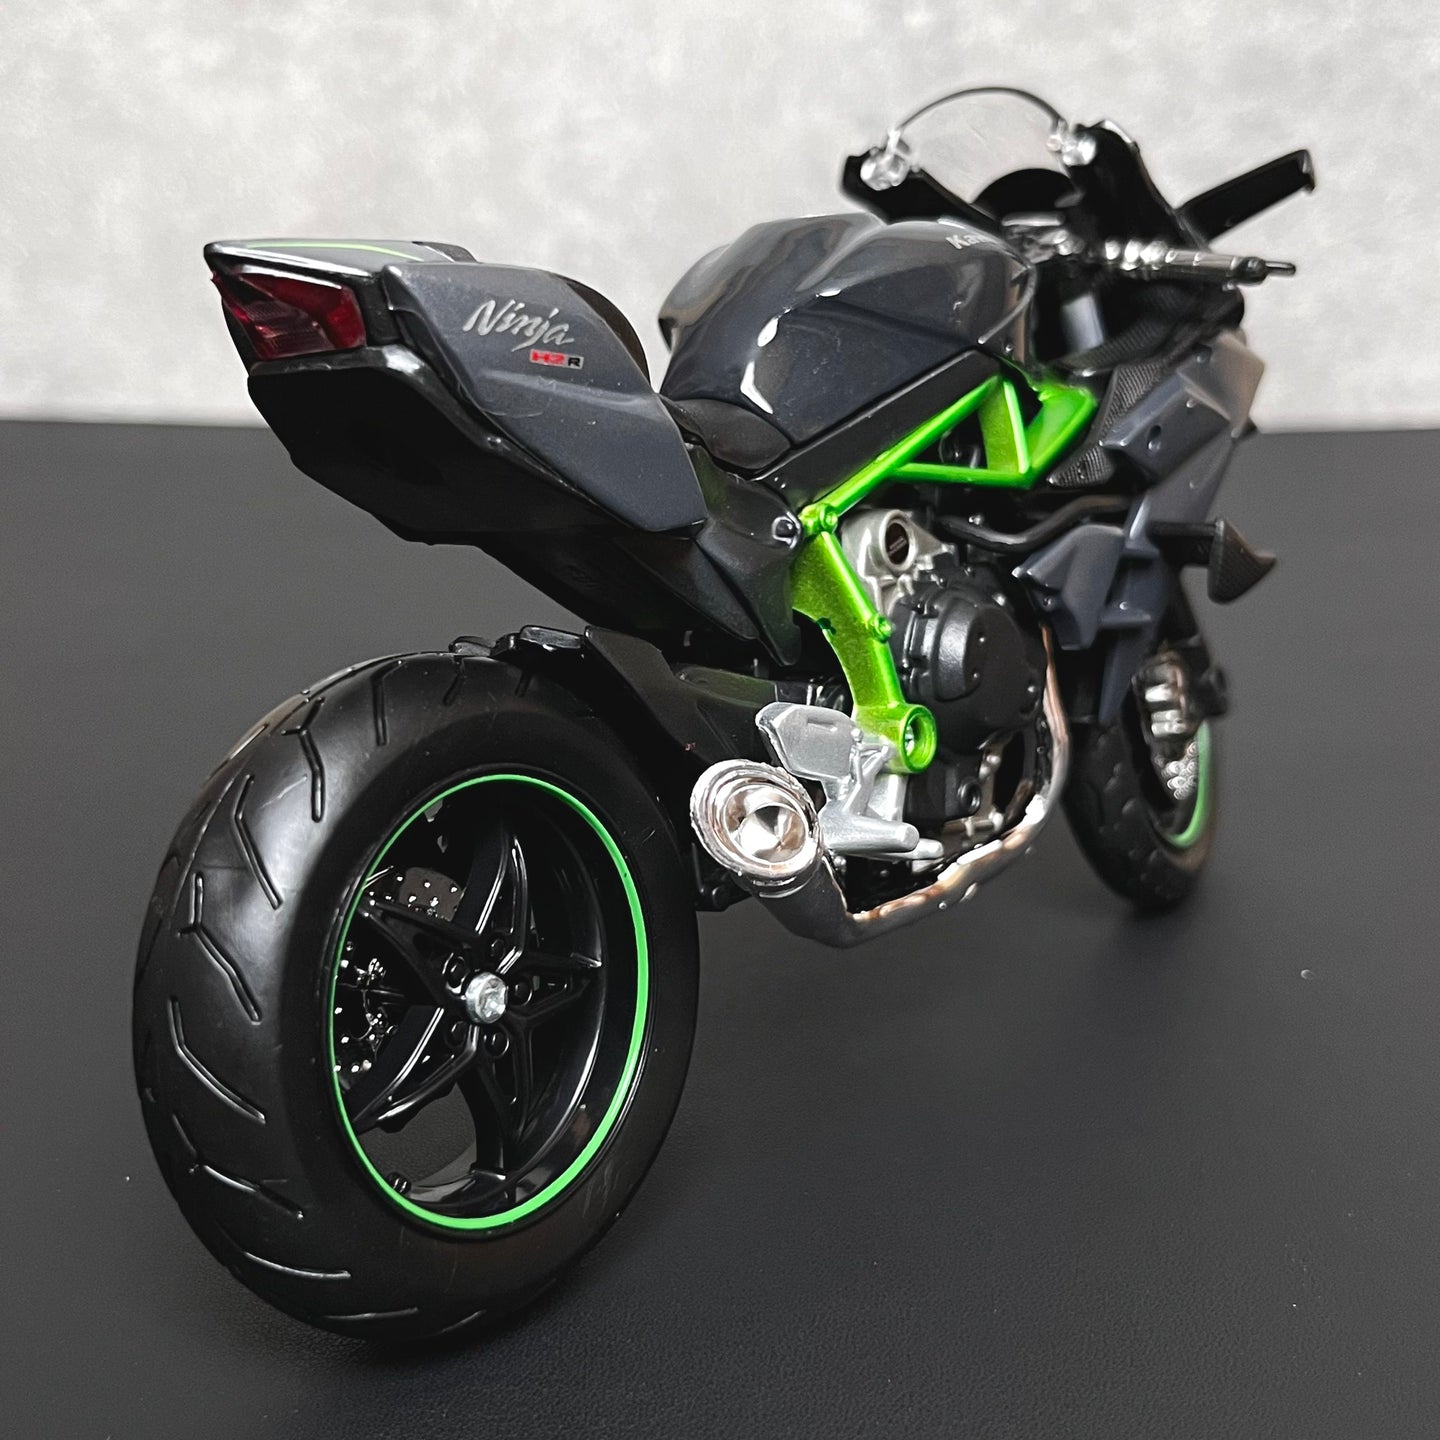 Kawasaki Ninja H2R Diecast Bike 1:12 Motorcycle Model By Maisto